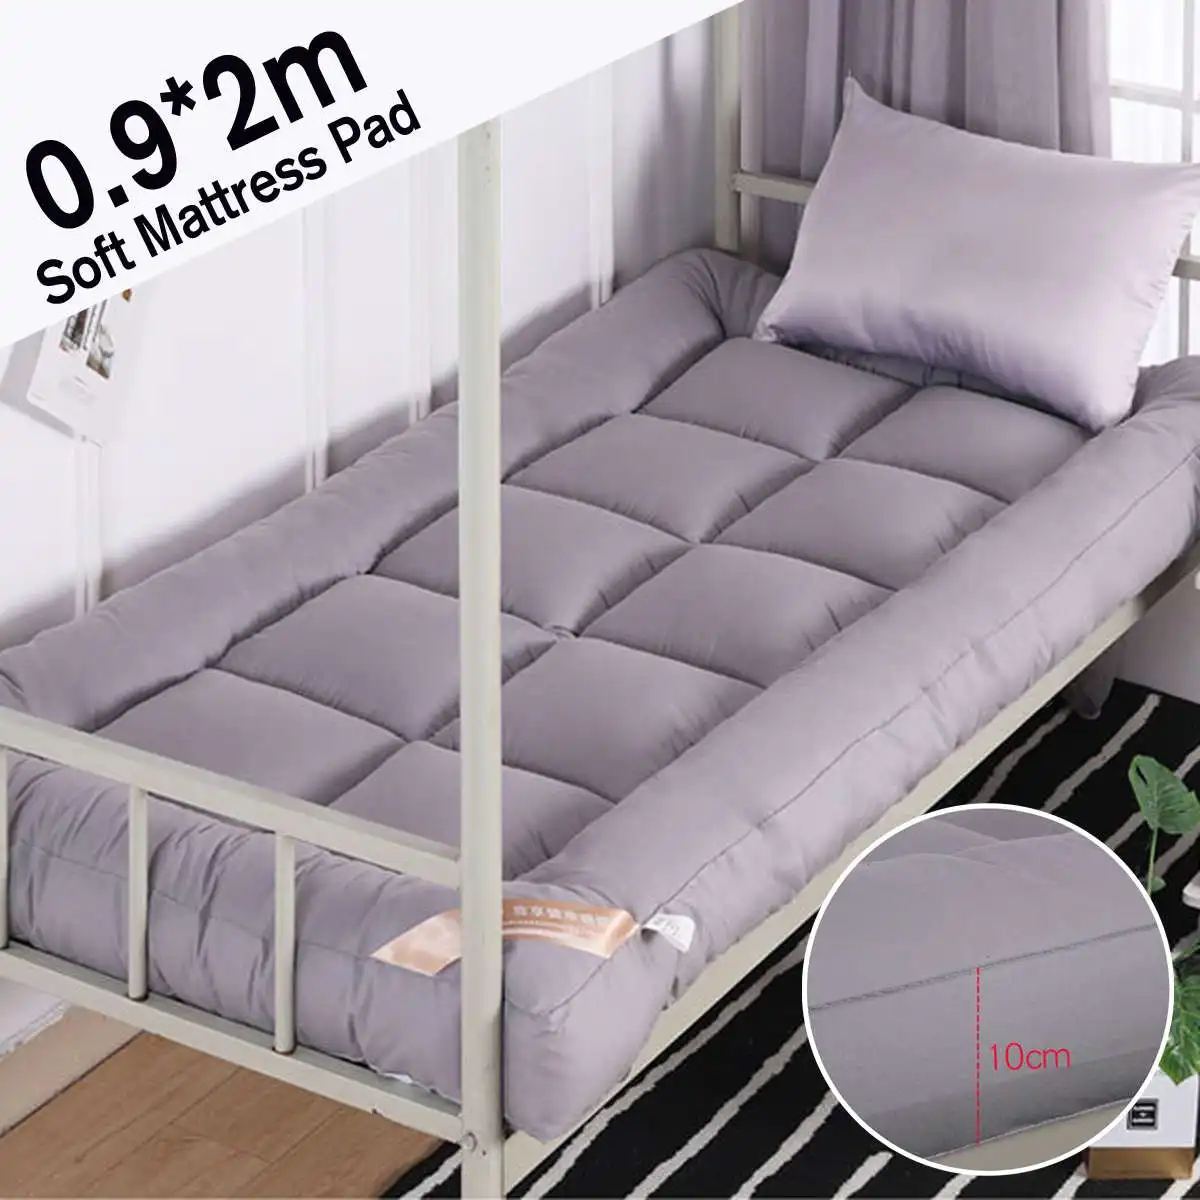 

200x90cm Mattress Ergonomic 10cm Thickness Foldable Student Dormitory Mattresses Cotton Cover Tatami Single Bed Size Bedroom